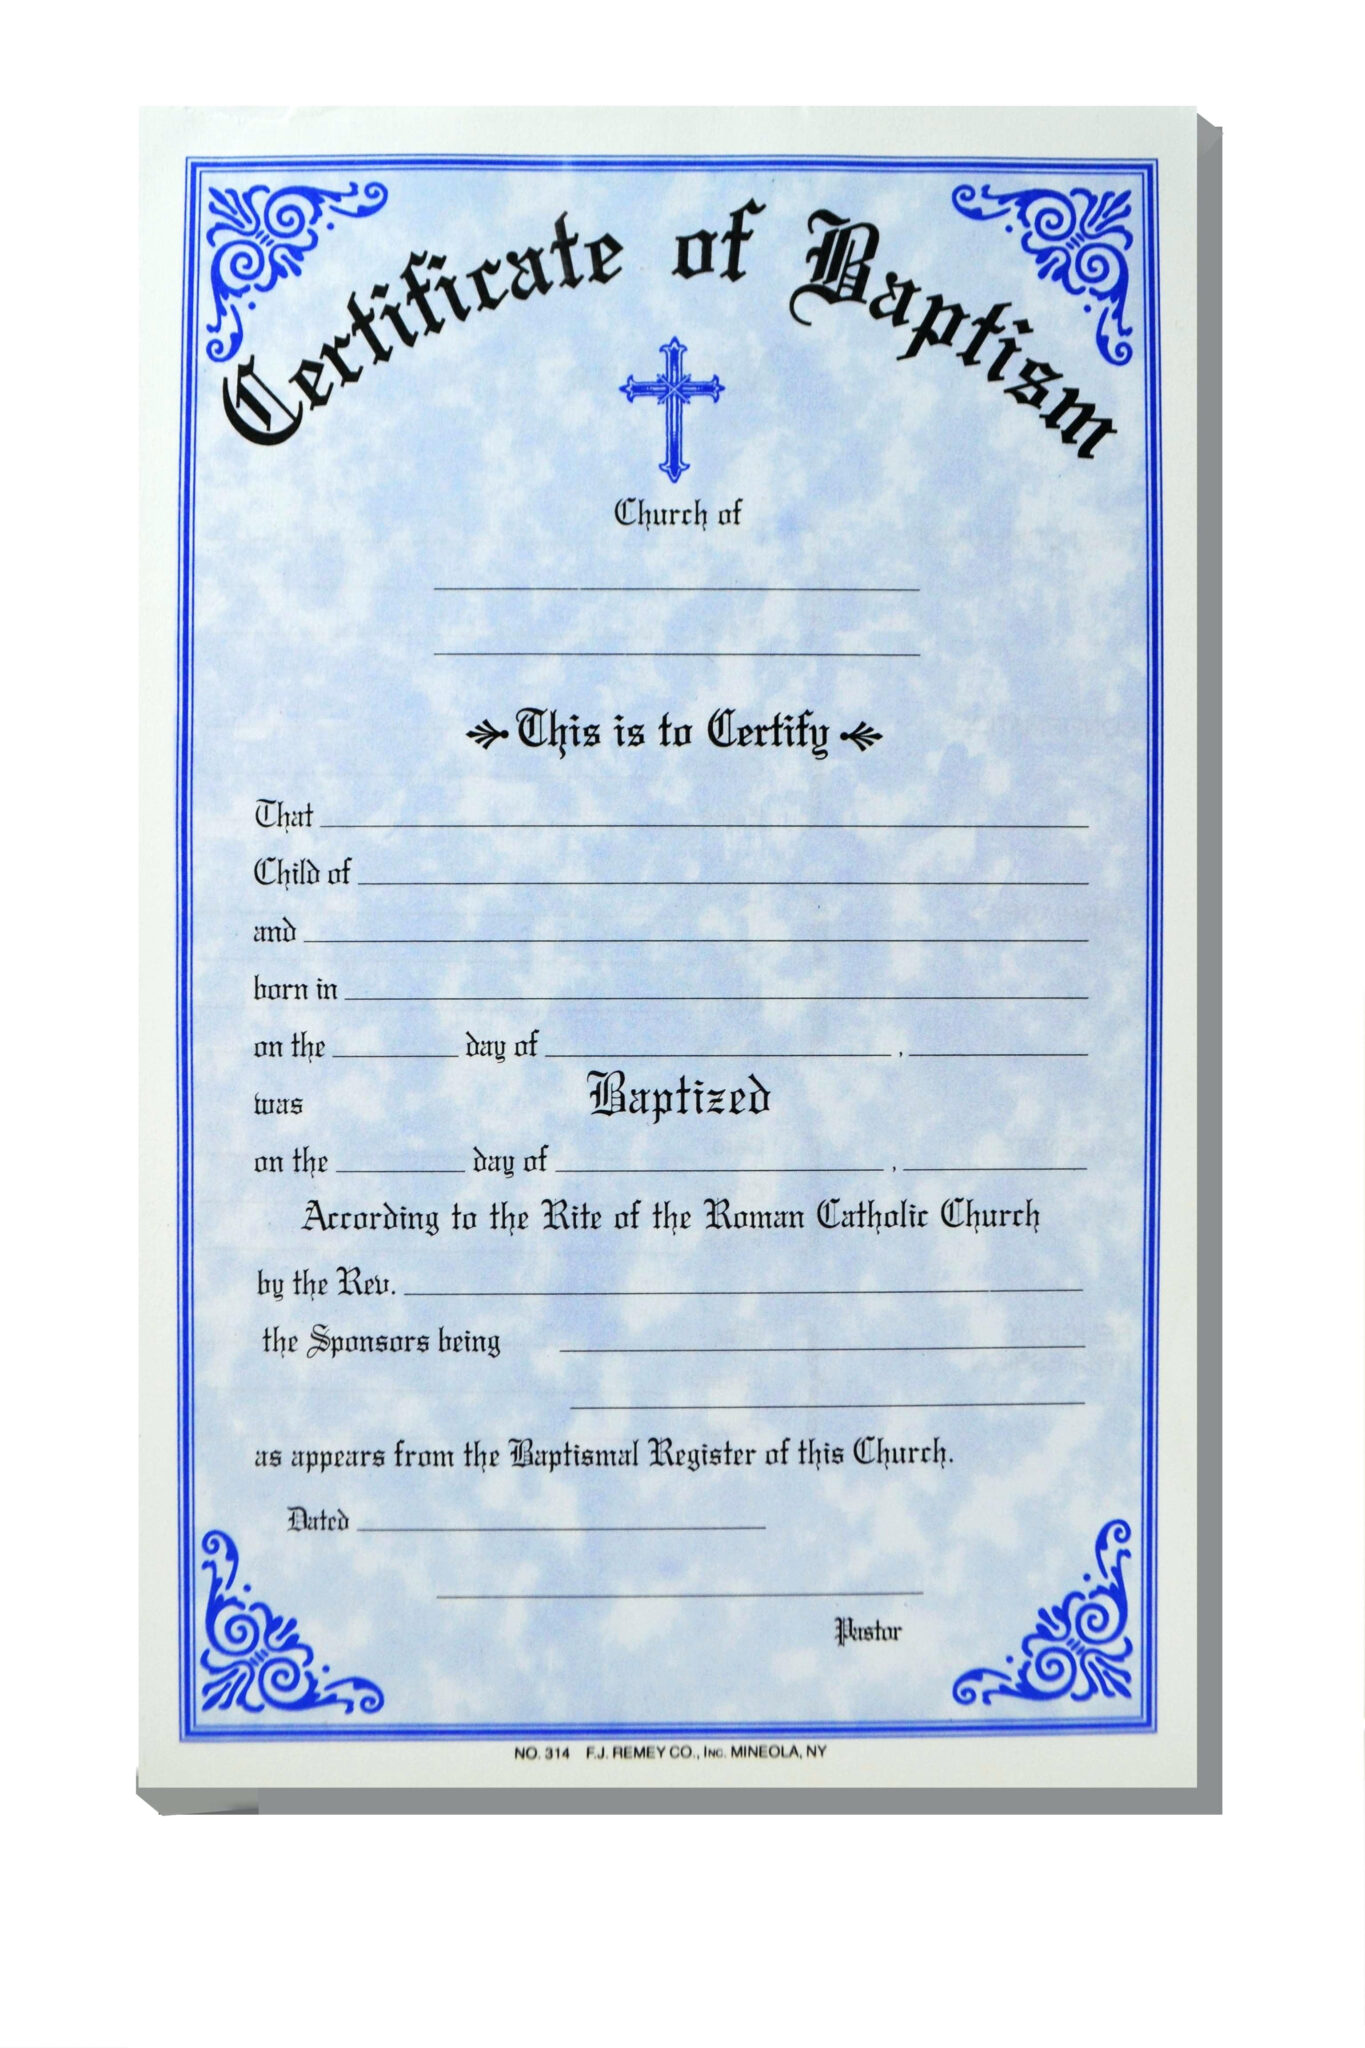 baptism-certificate-template-word-heartwork-with-regard-to-baptism-certificate-template